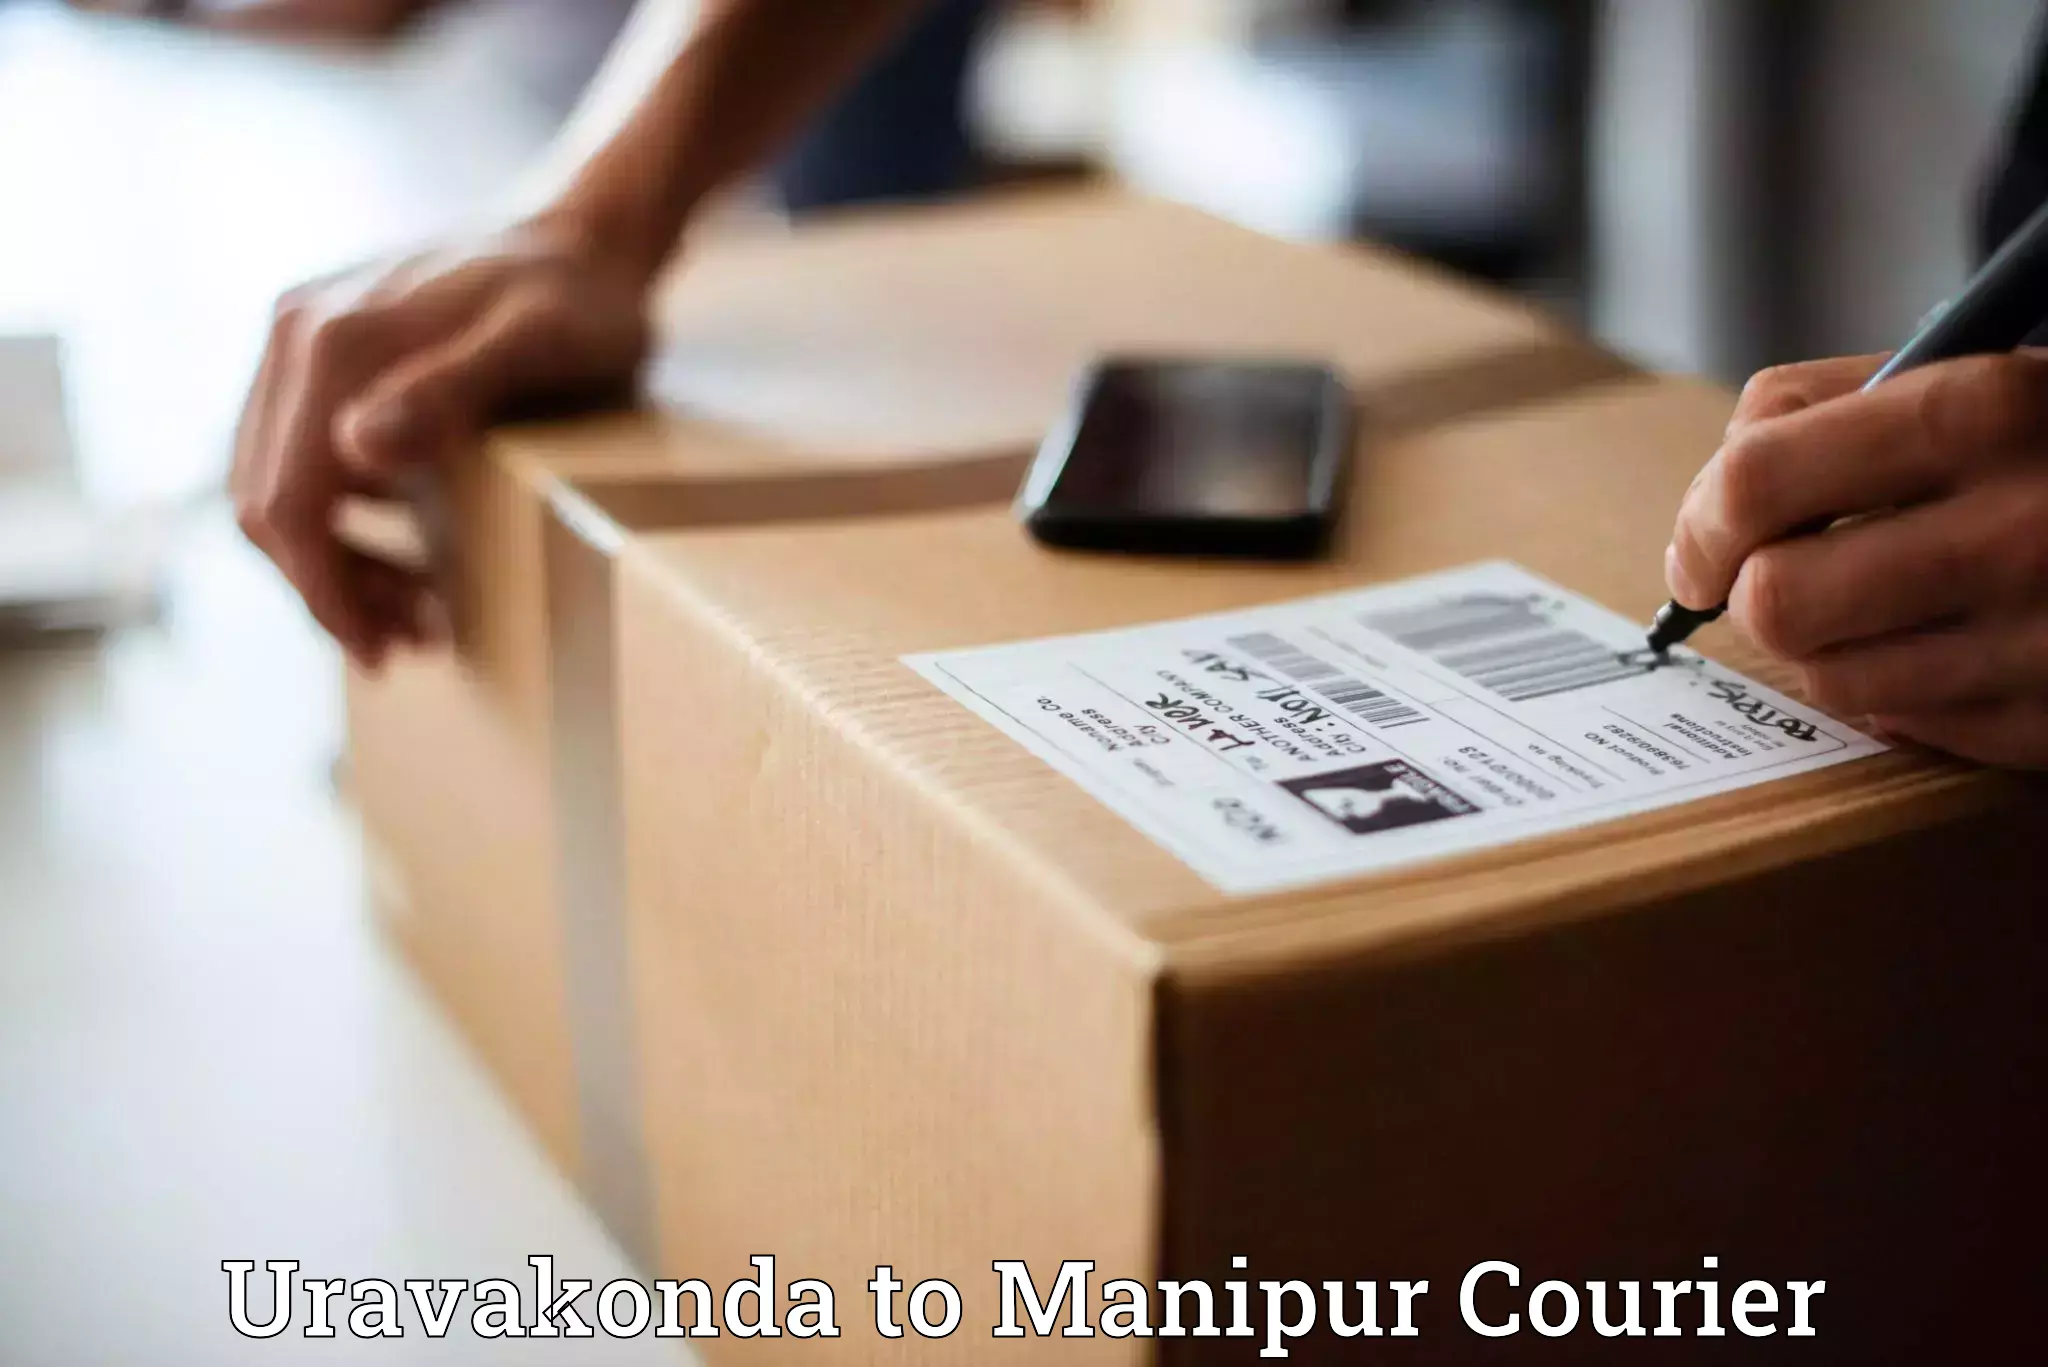 User-friendly delivery service Uravakonda to Kanti